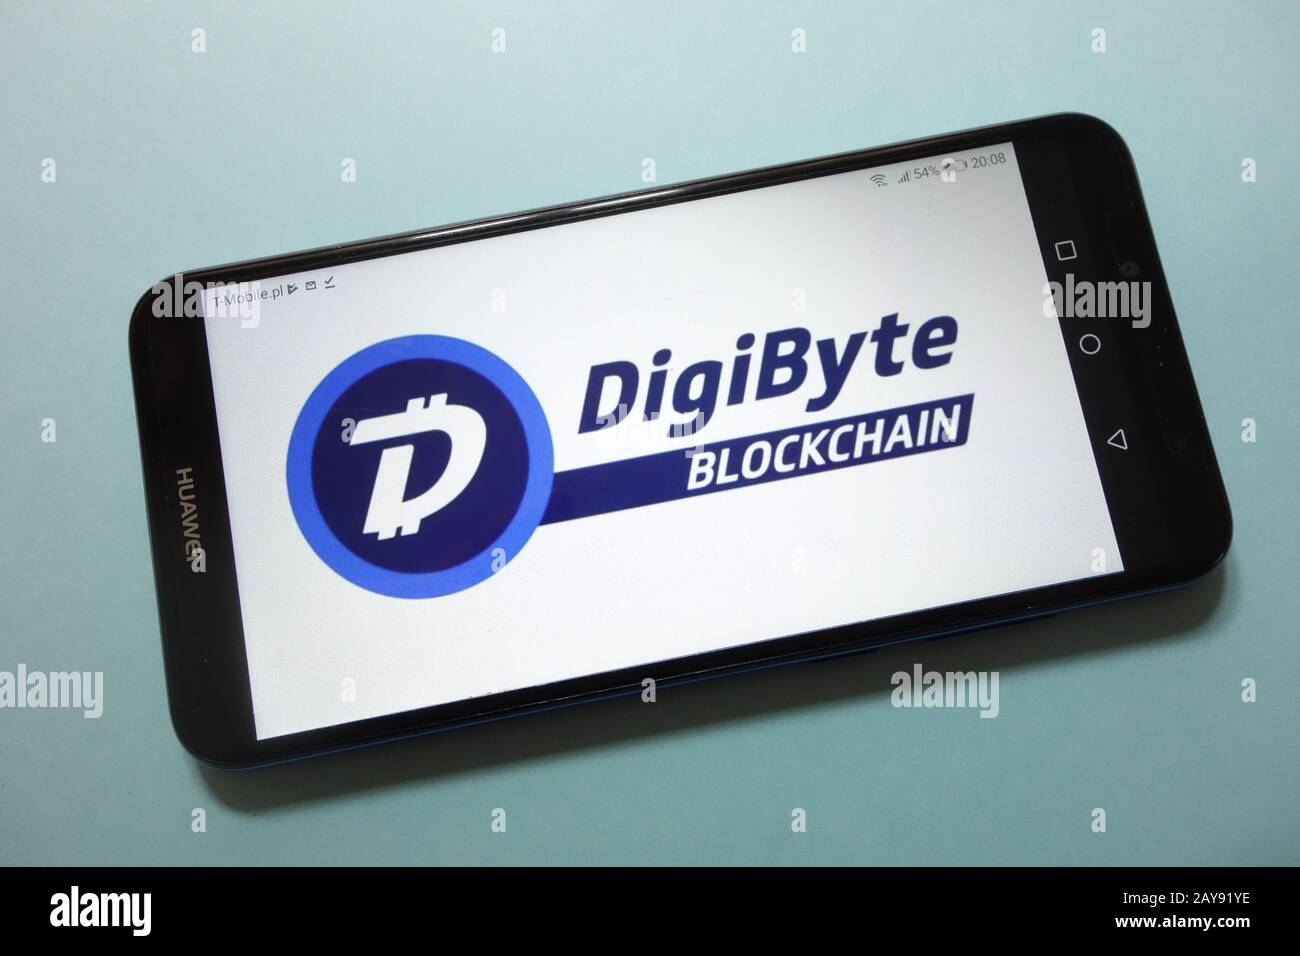 DigiByte (DGB) cryptocurrency logo displayed on smartphone Stock Photo